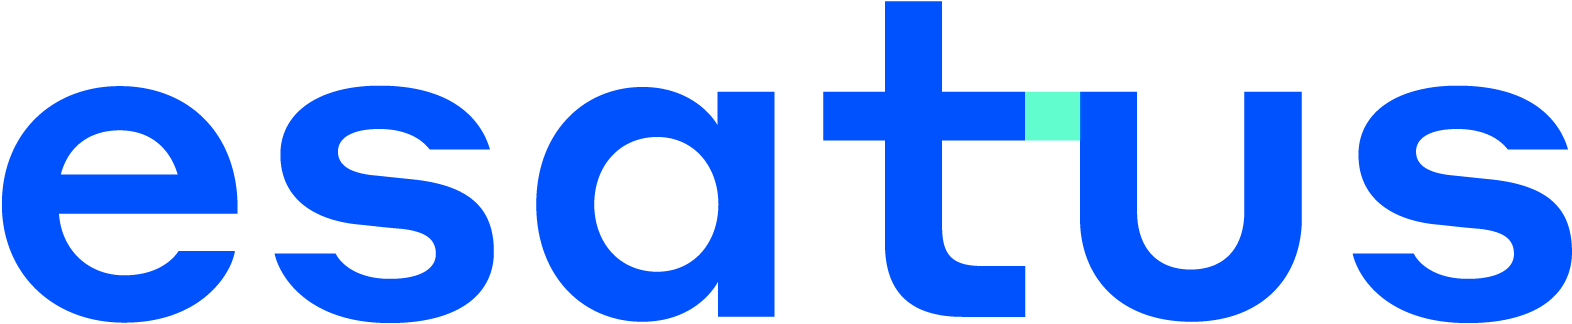 esatus AG logo